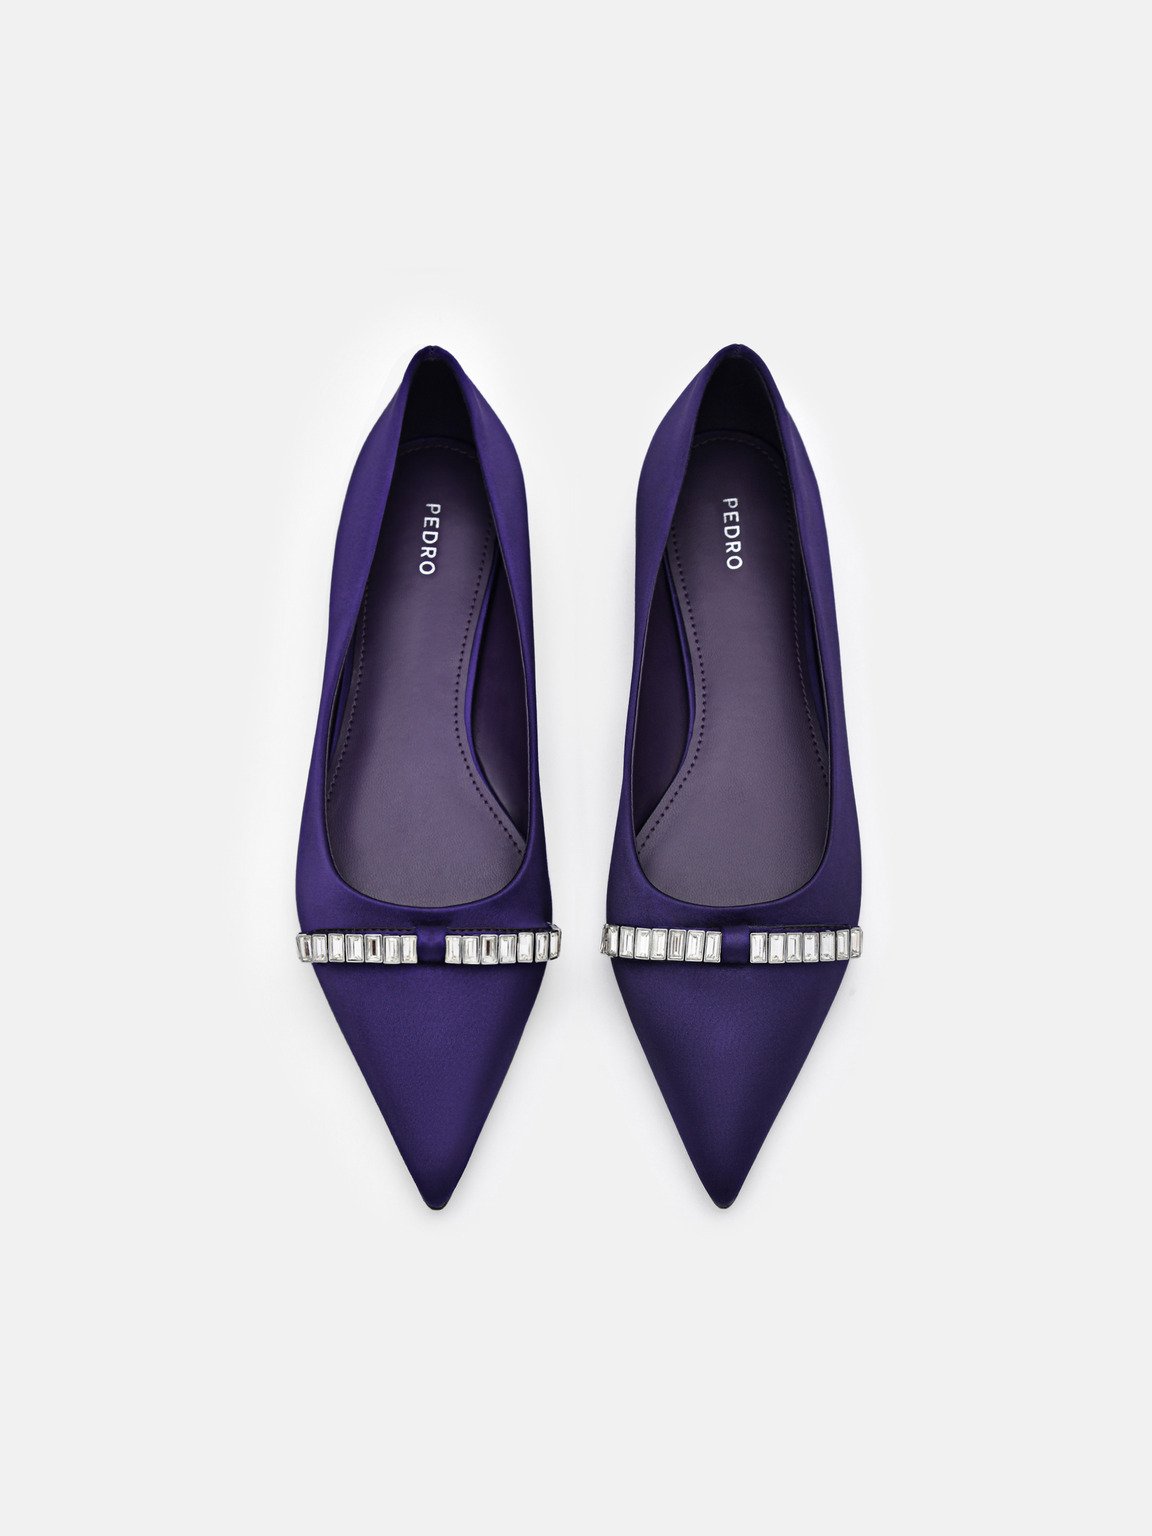 Mindy緞面芭蕾平底鞋, Dark Purple